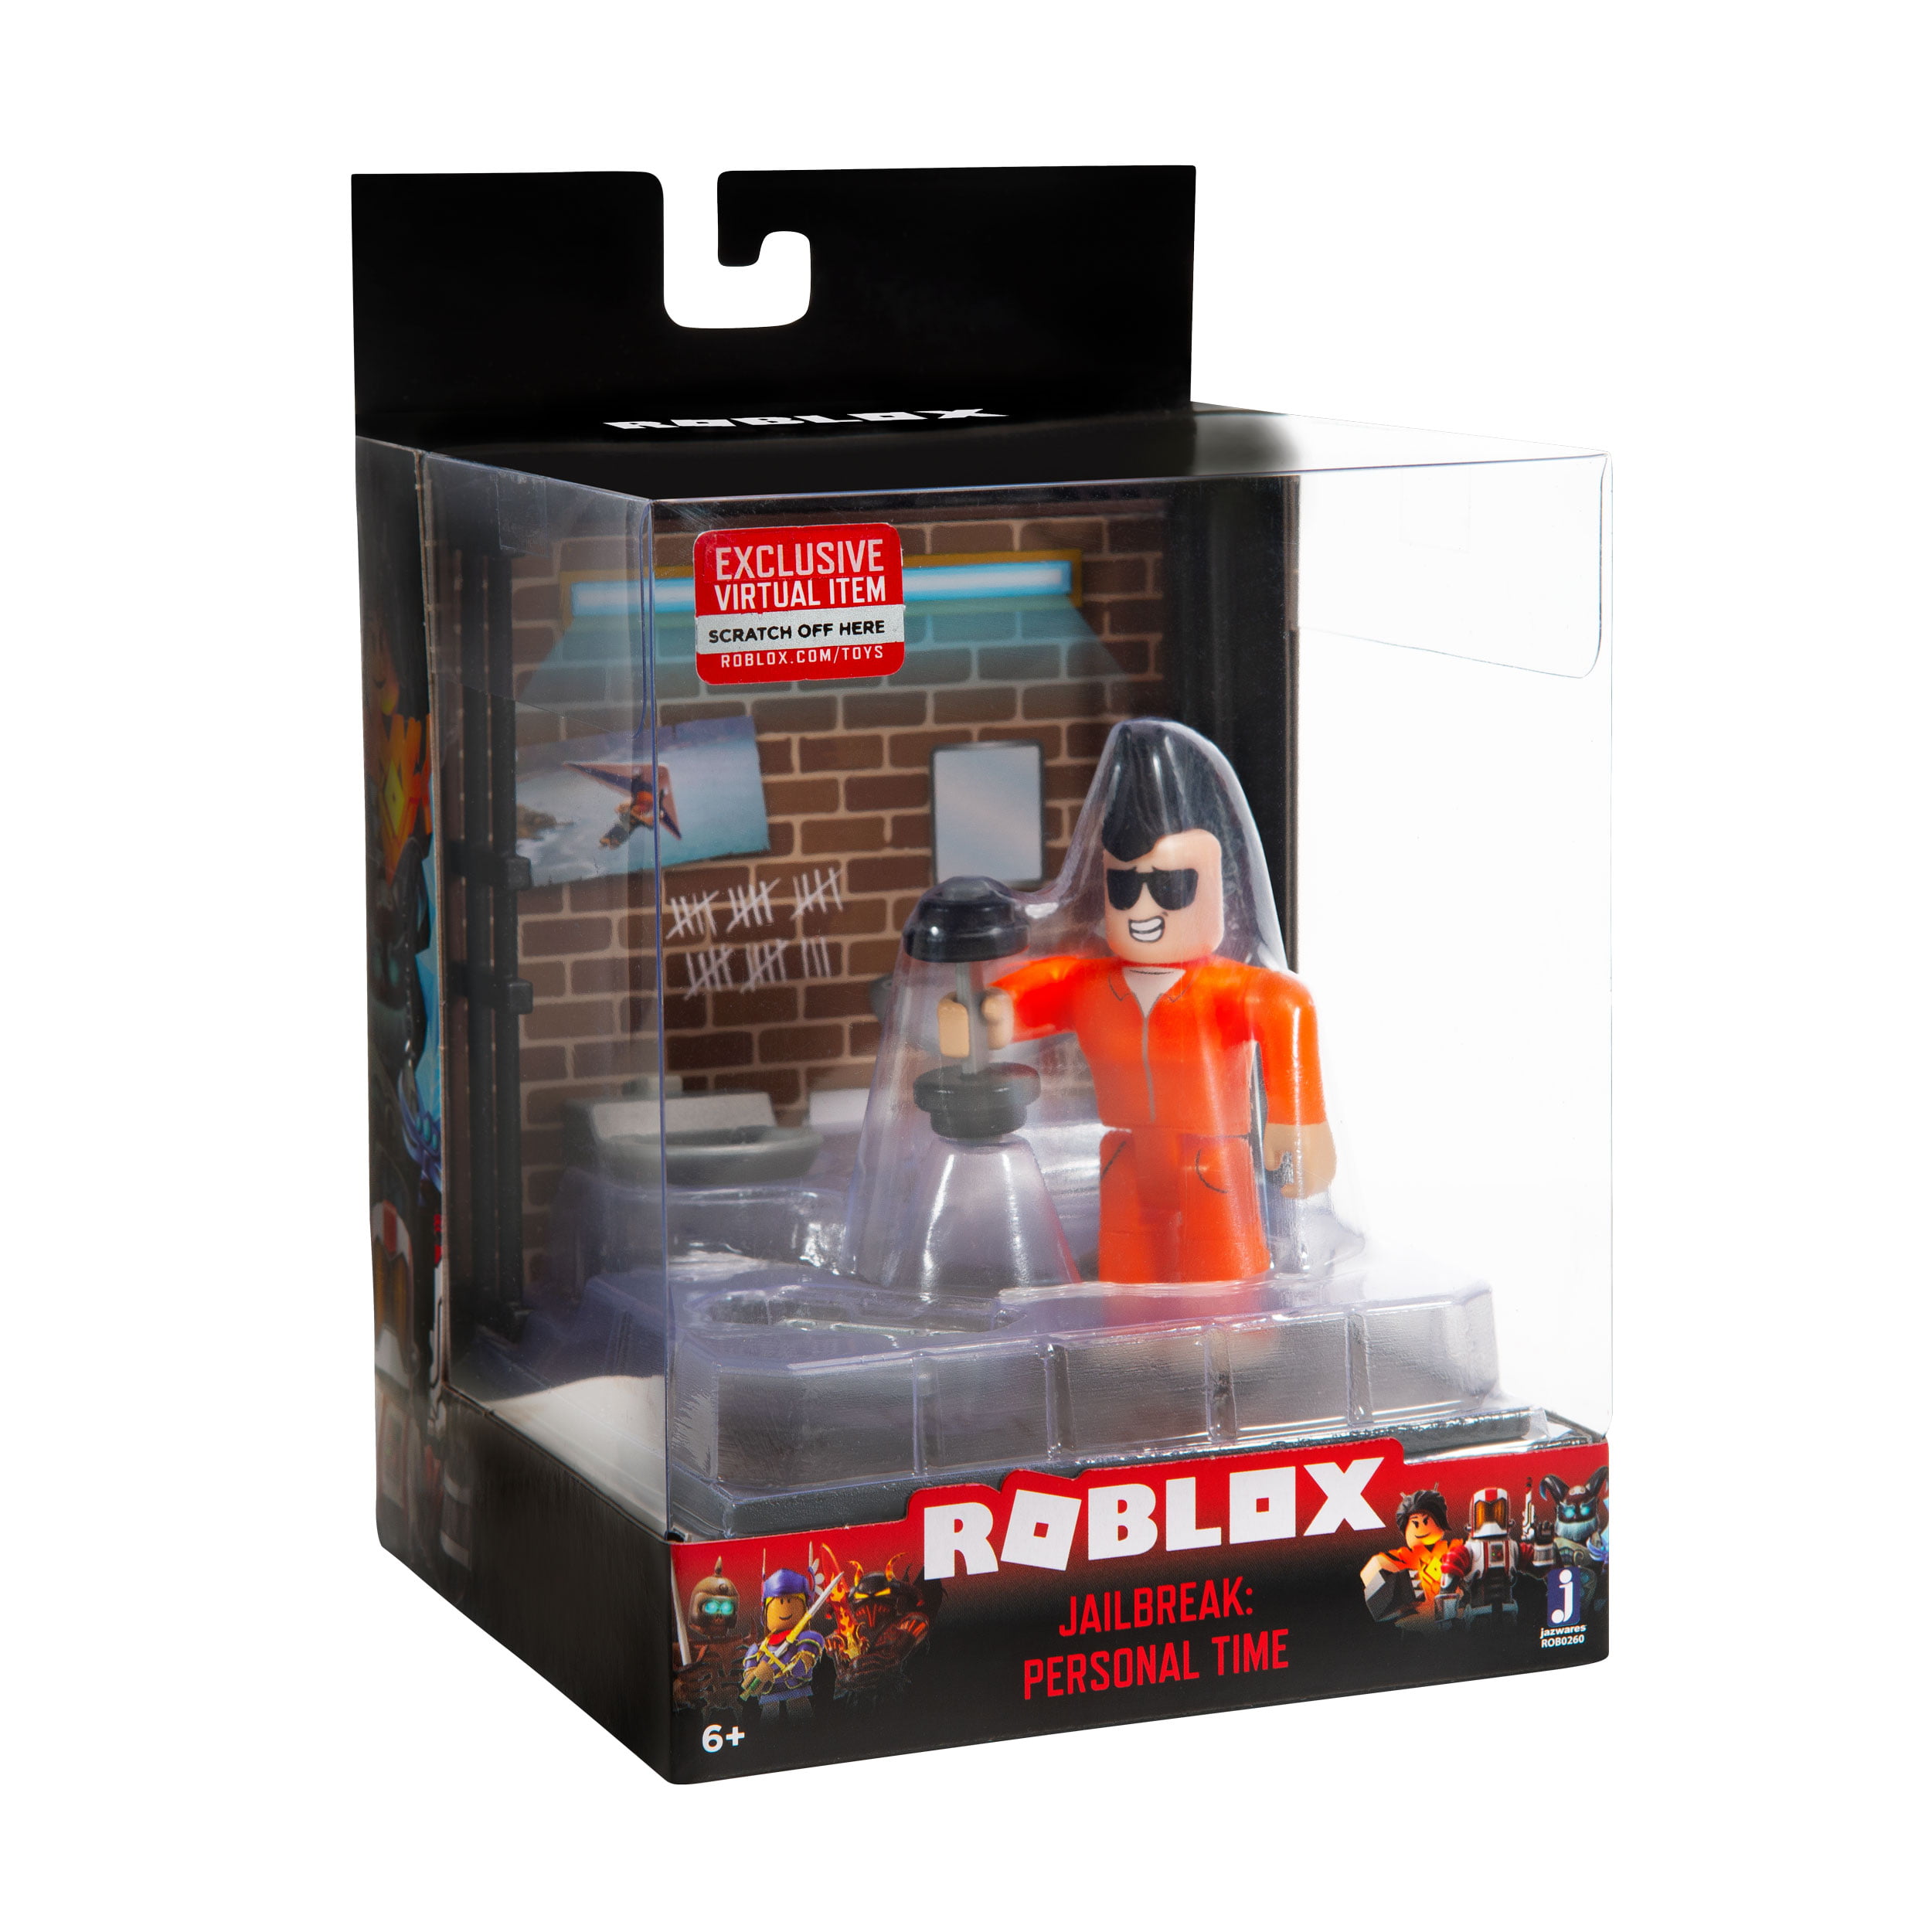 Inmate ROBLOX Mini Figure w/ Virtual Game Code Series 4 NEW Jailbreak